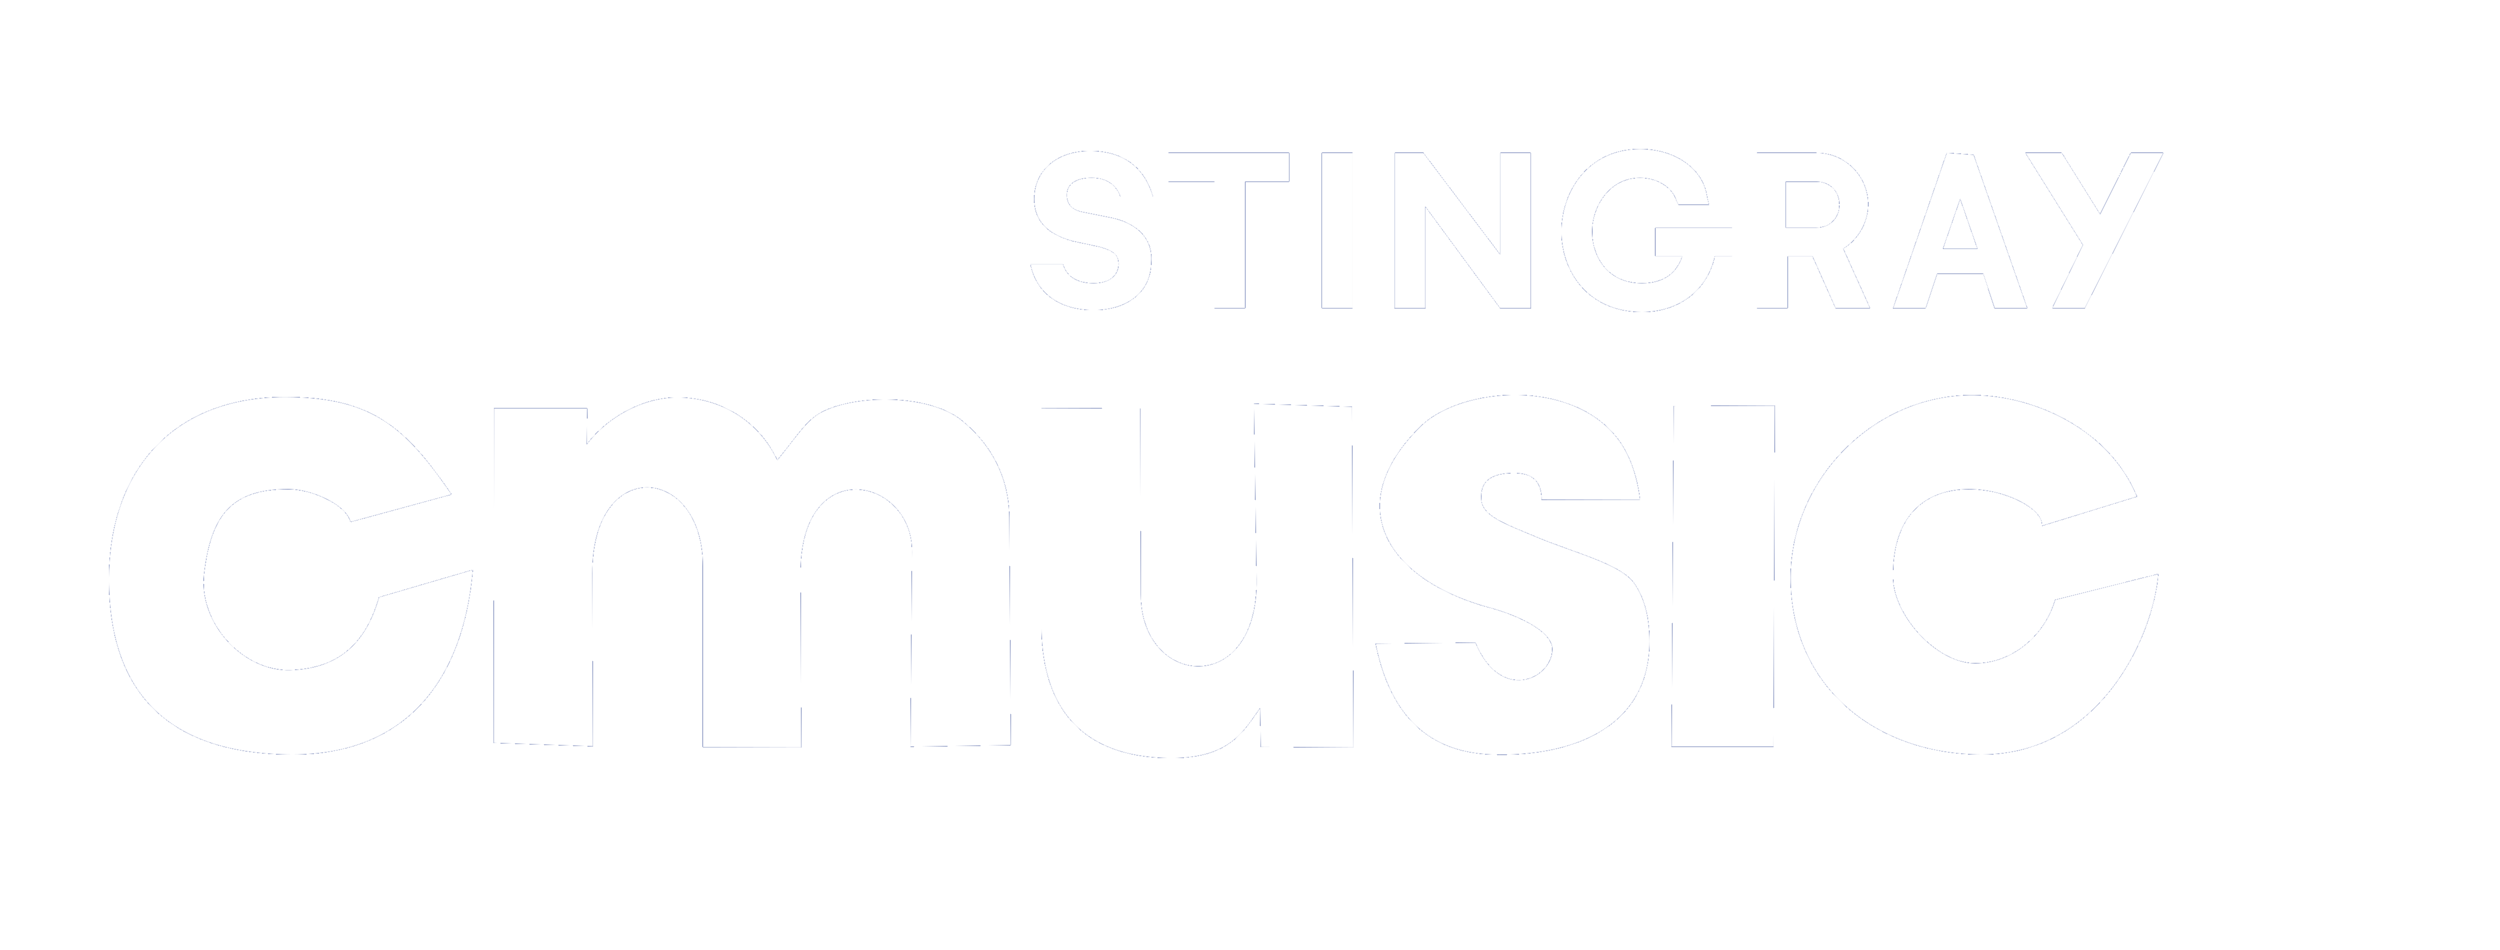 Stingray_Cmusic_Logo.png